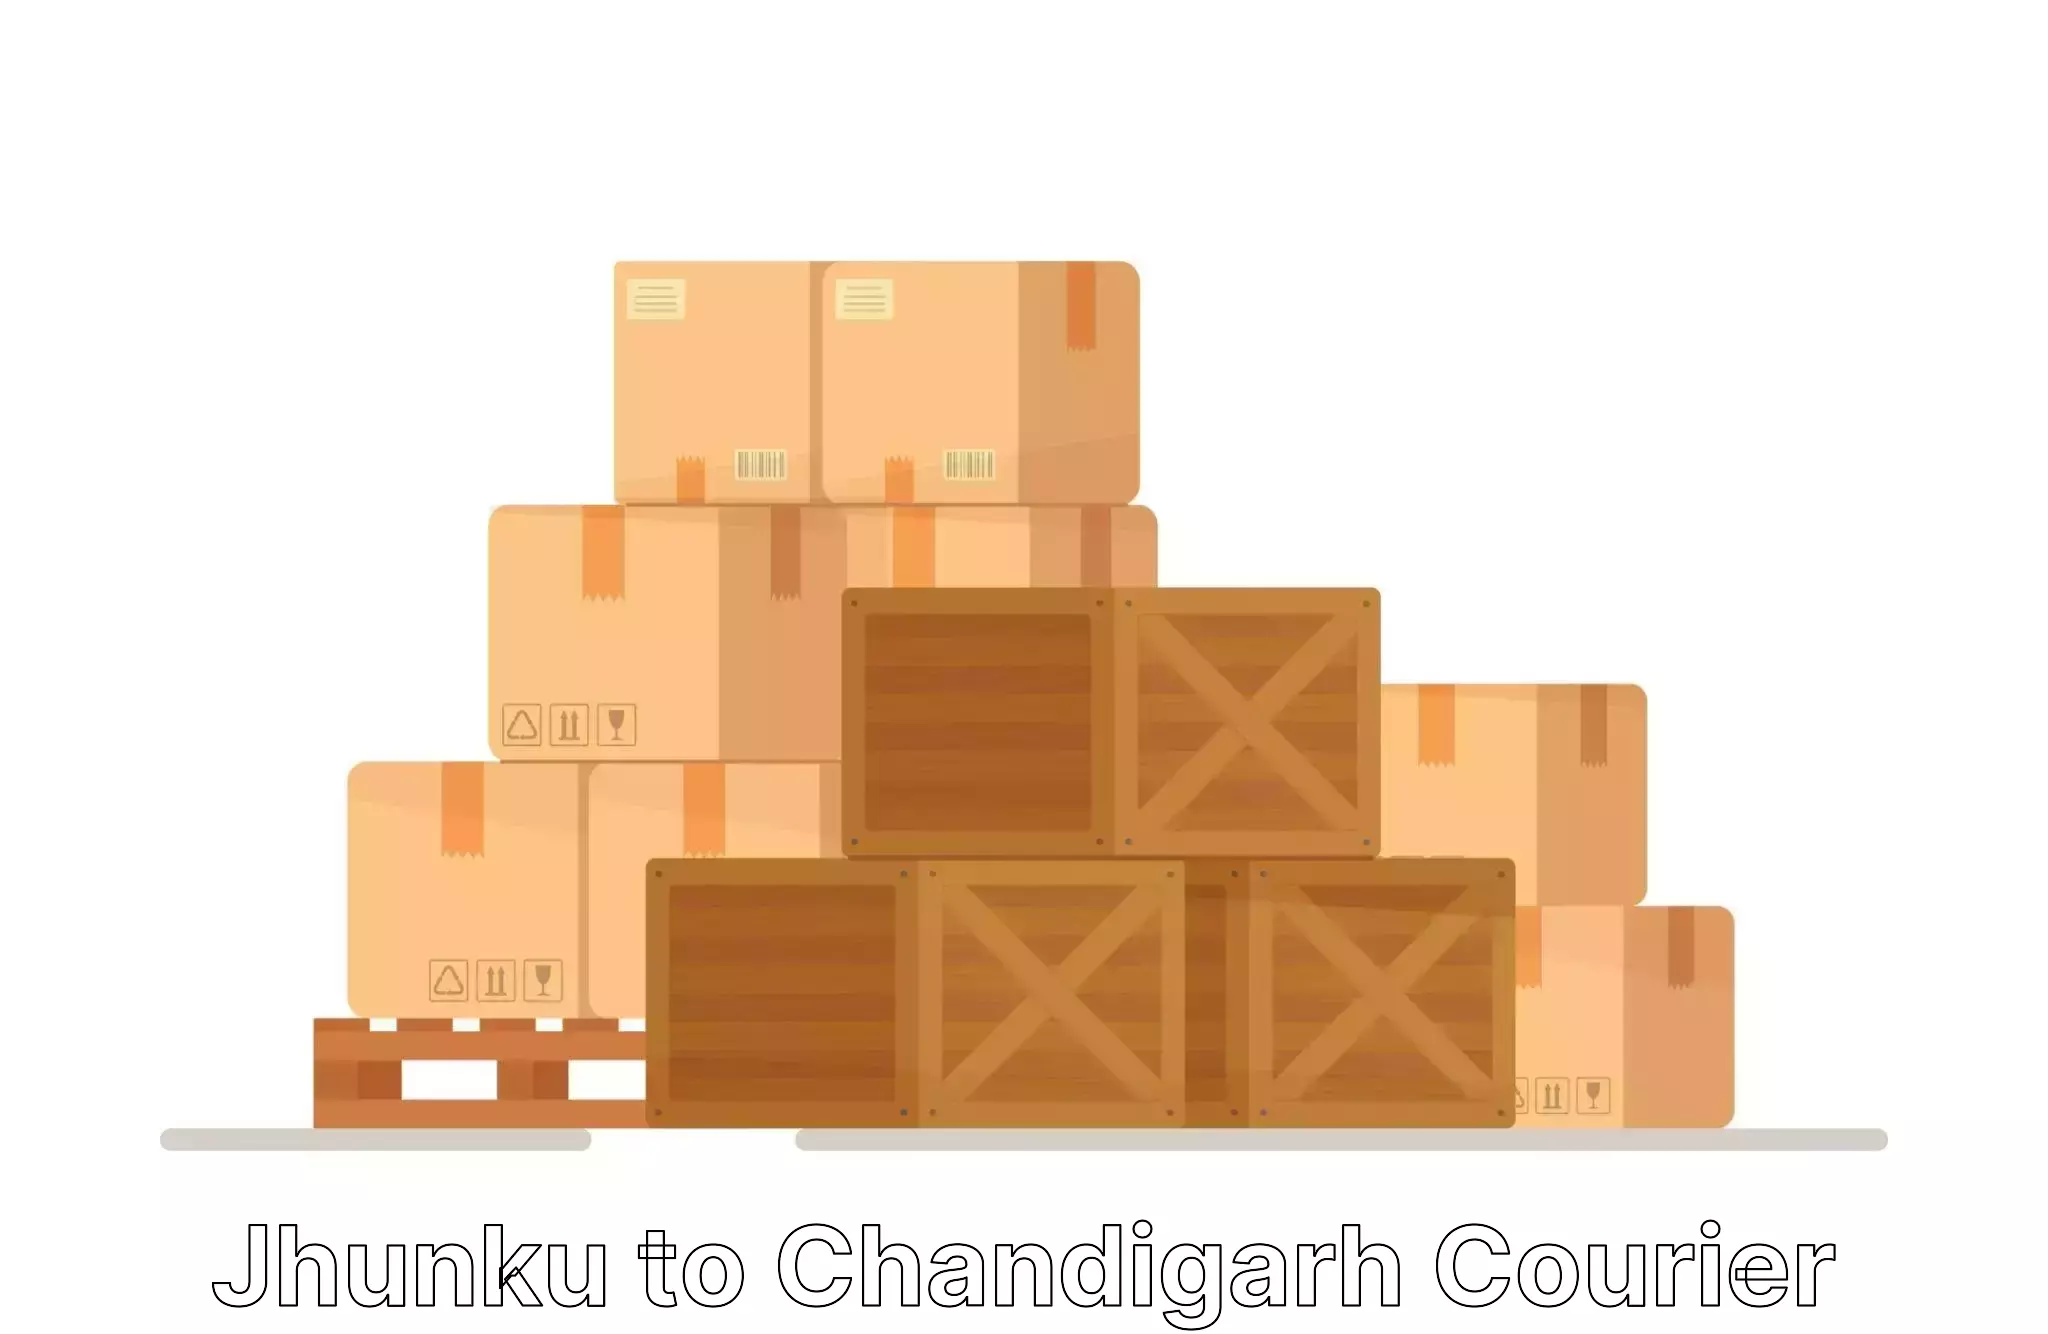 Furniture moving experts Jhunku to Chandigarh